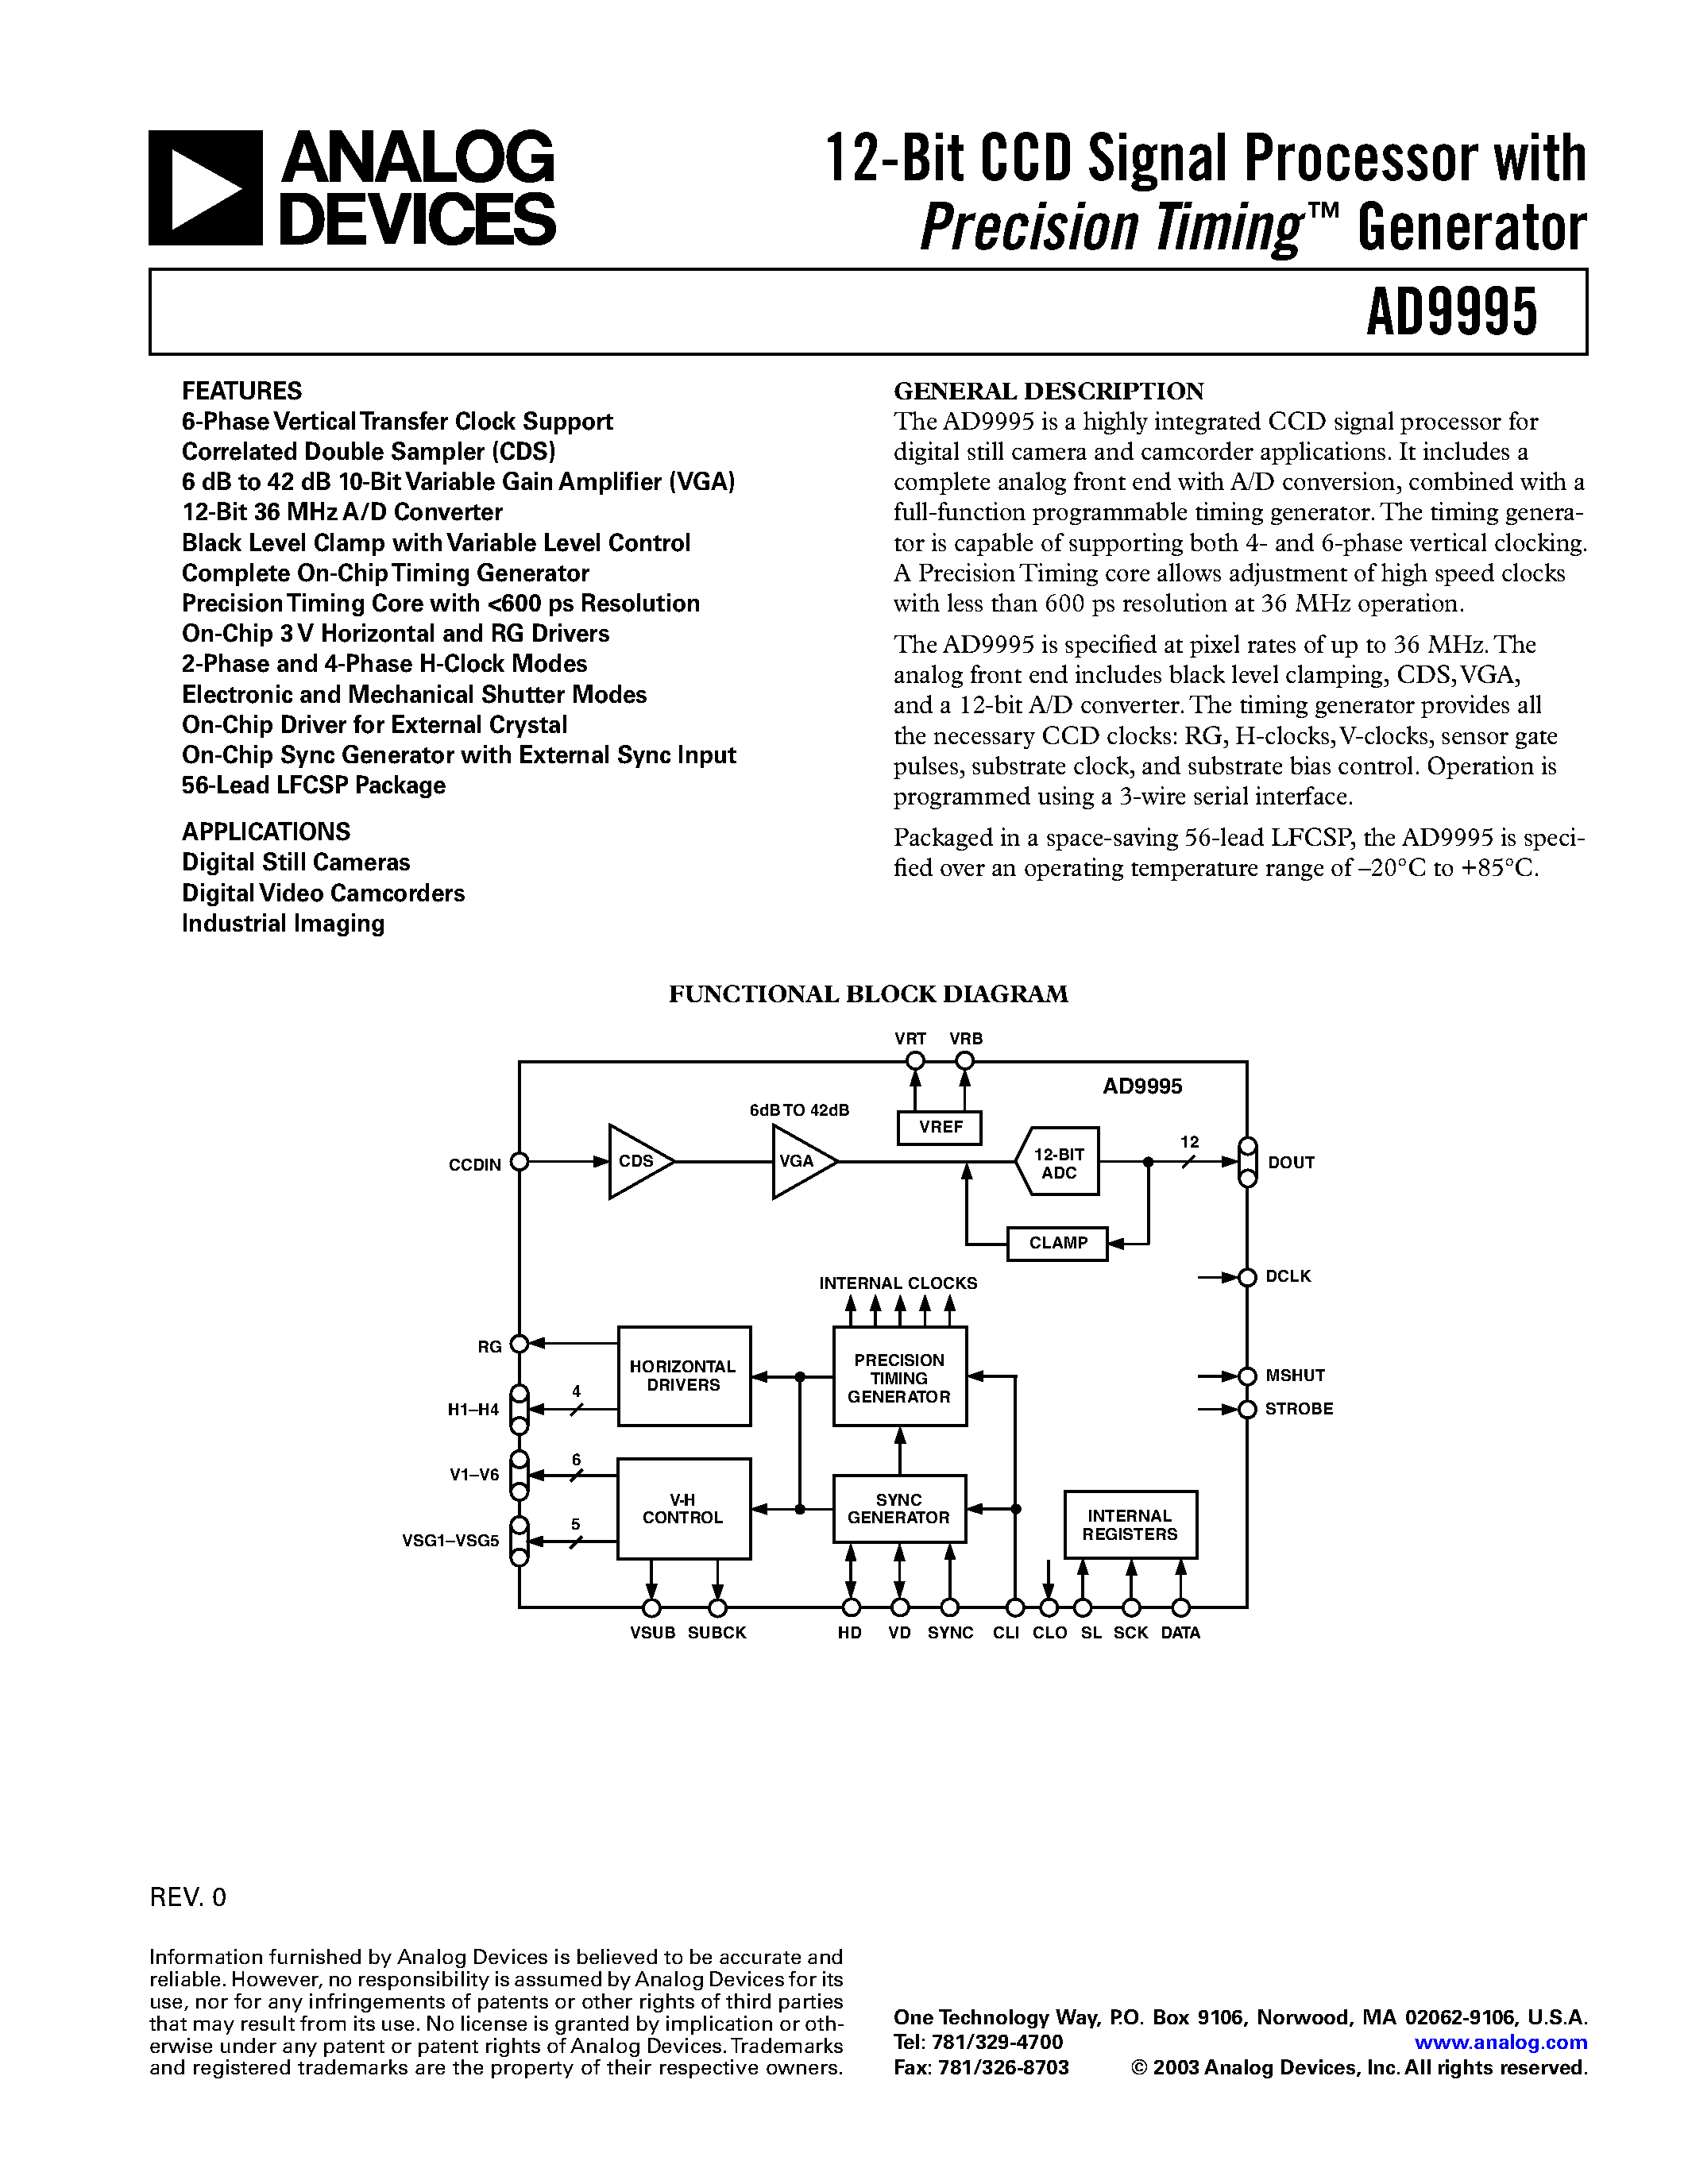 Даташит AD9995 - 12-Bit CCD Signal Processor with Precision Timing Generator страница 1